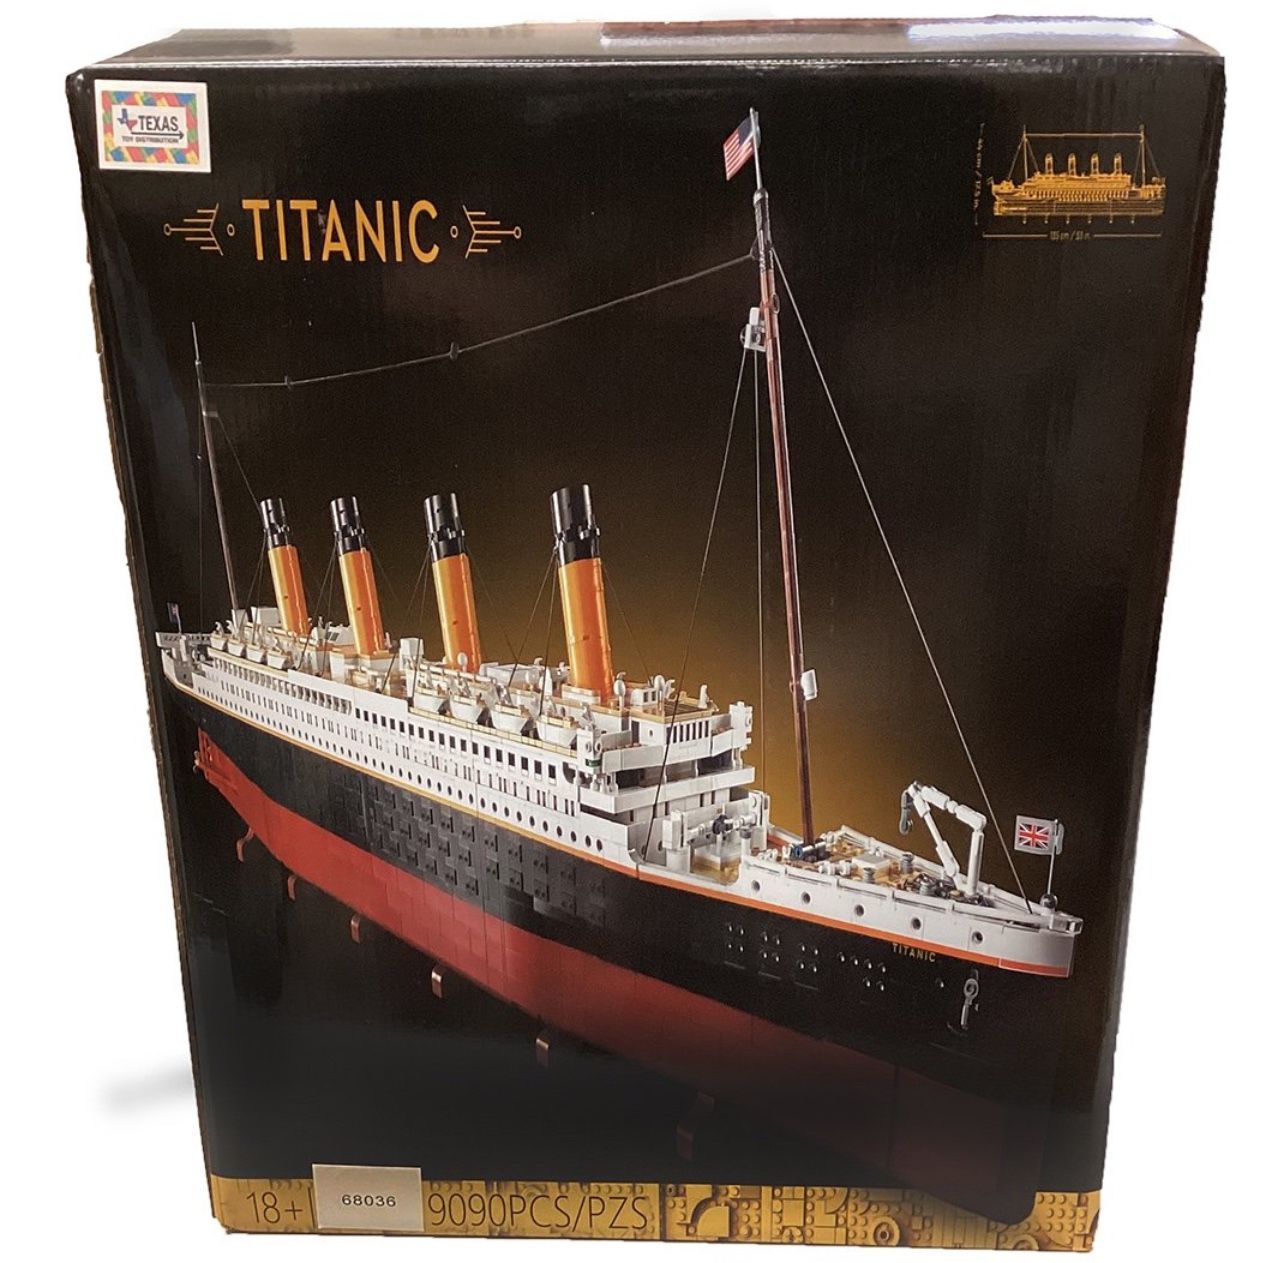 9090pcs Movie Large Cruise Boat Ship Steamship RMS Cruise Ship Building Blocks Bricks Toys  New in box.